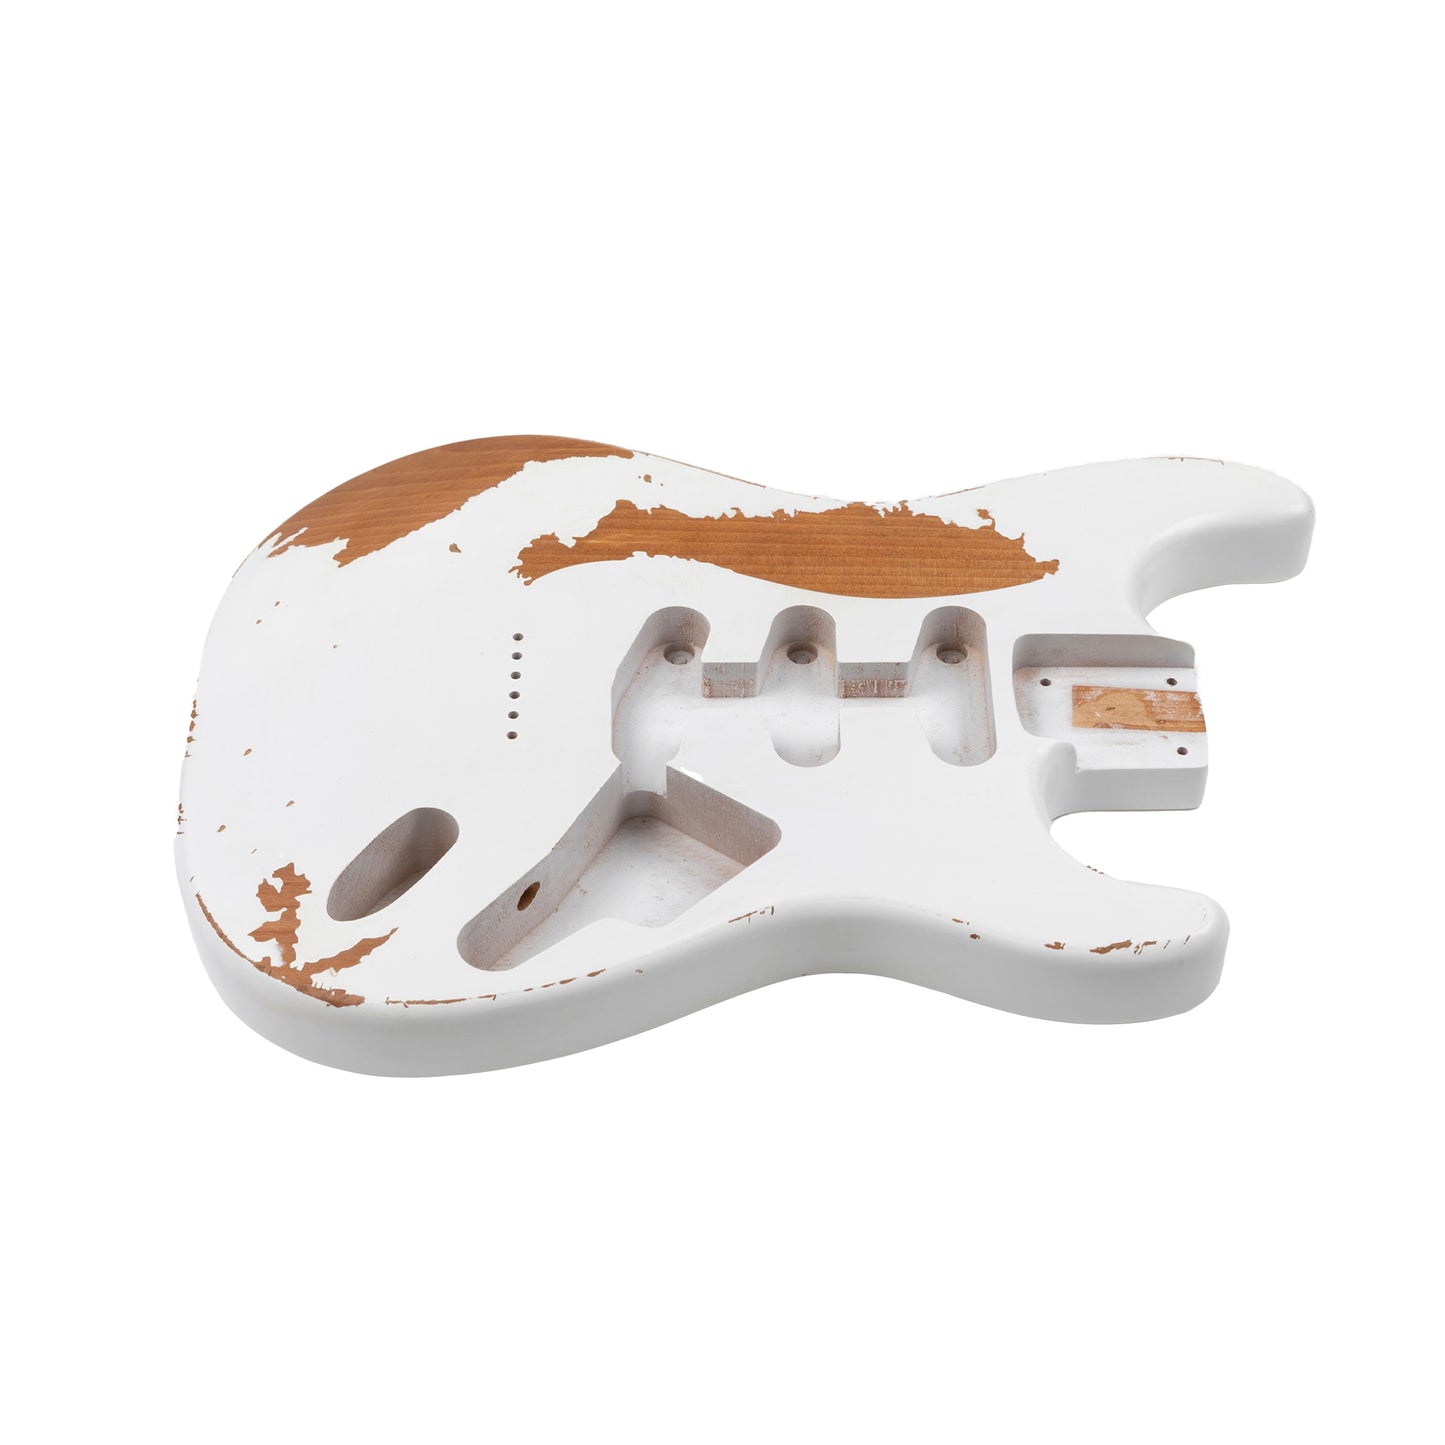 AE Guitars® Artifact Series Replacement Hardtail Guitar Body - Antique White